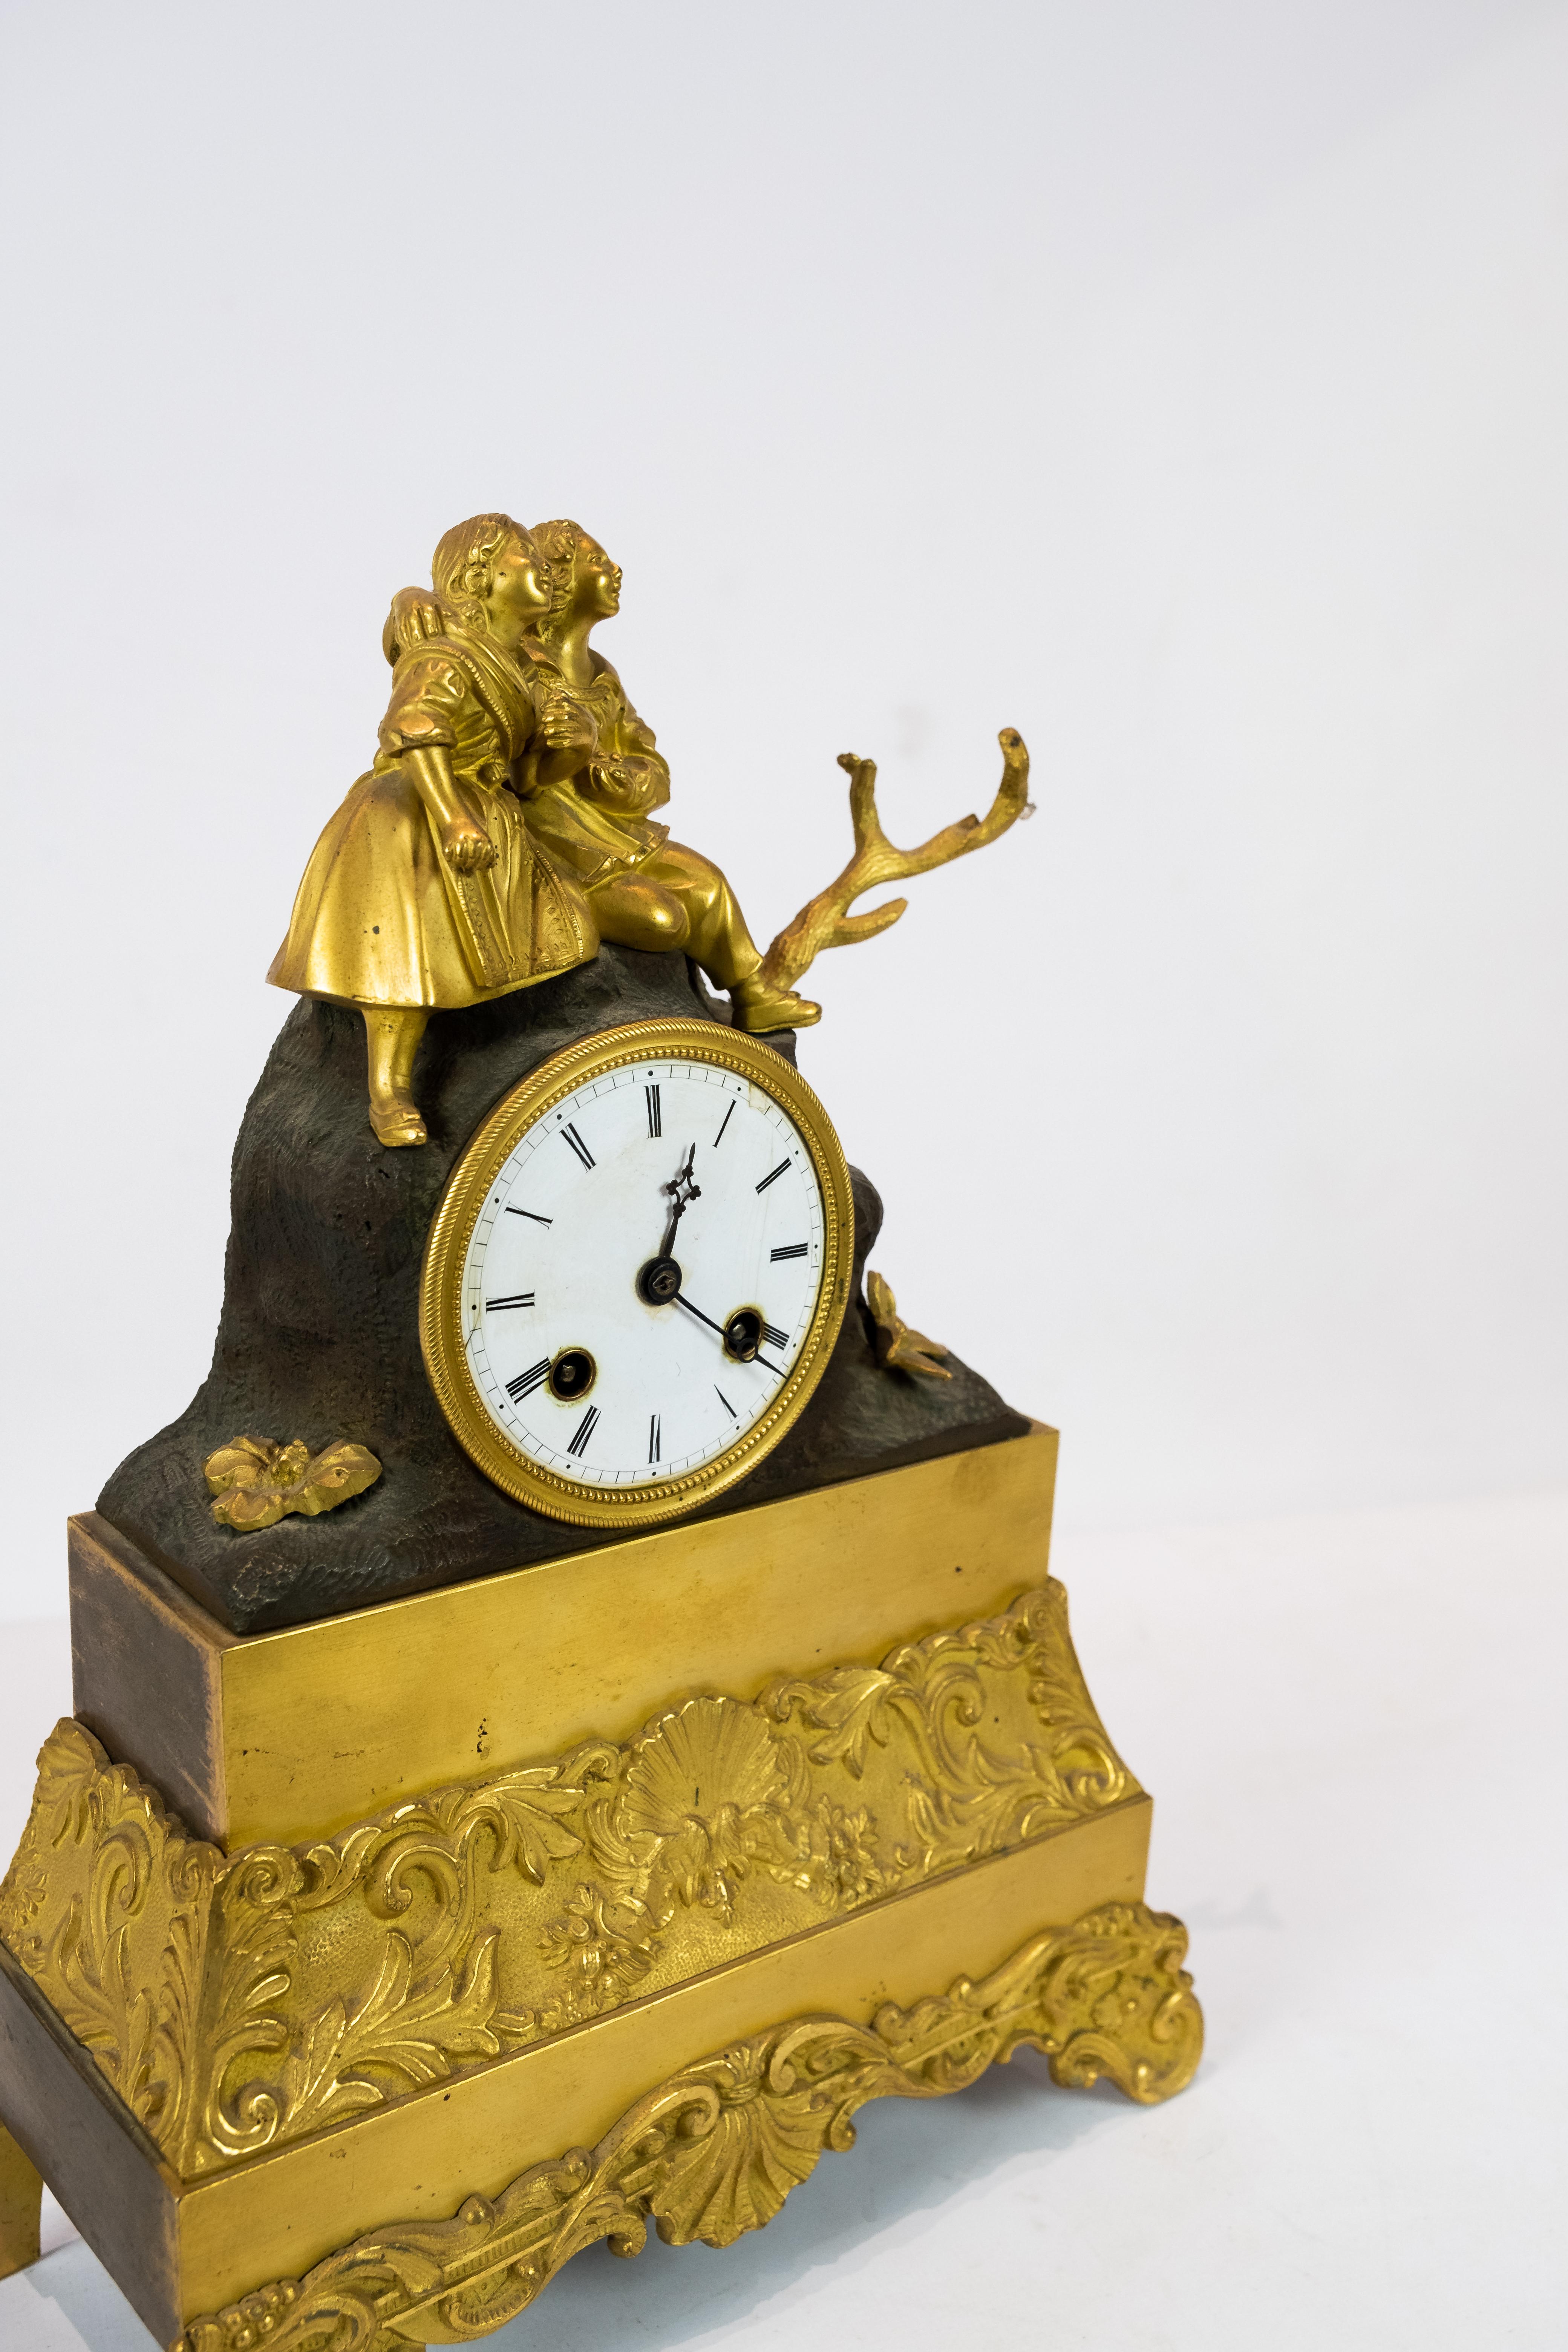 1800s mantel clock